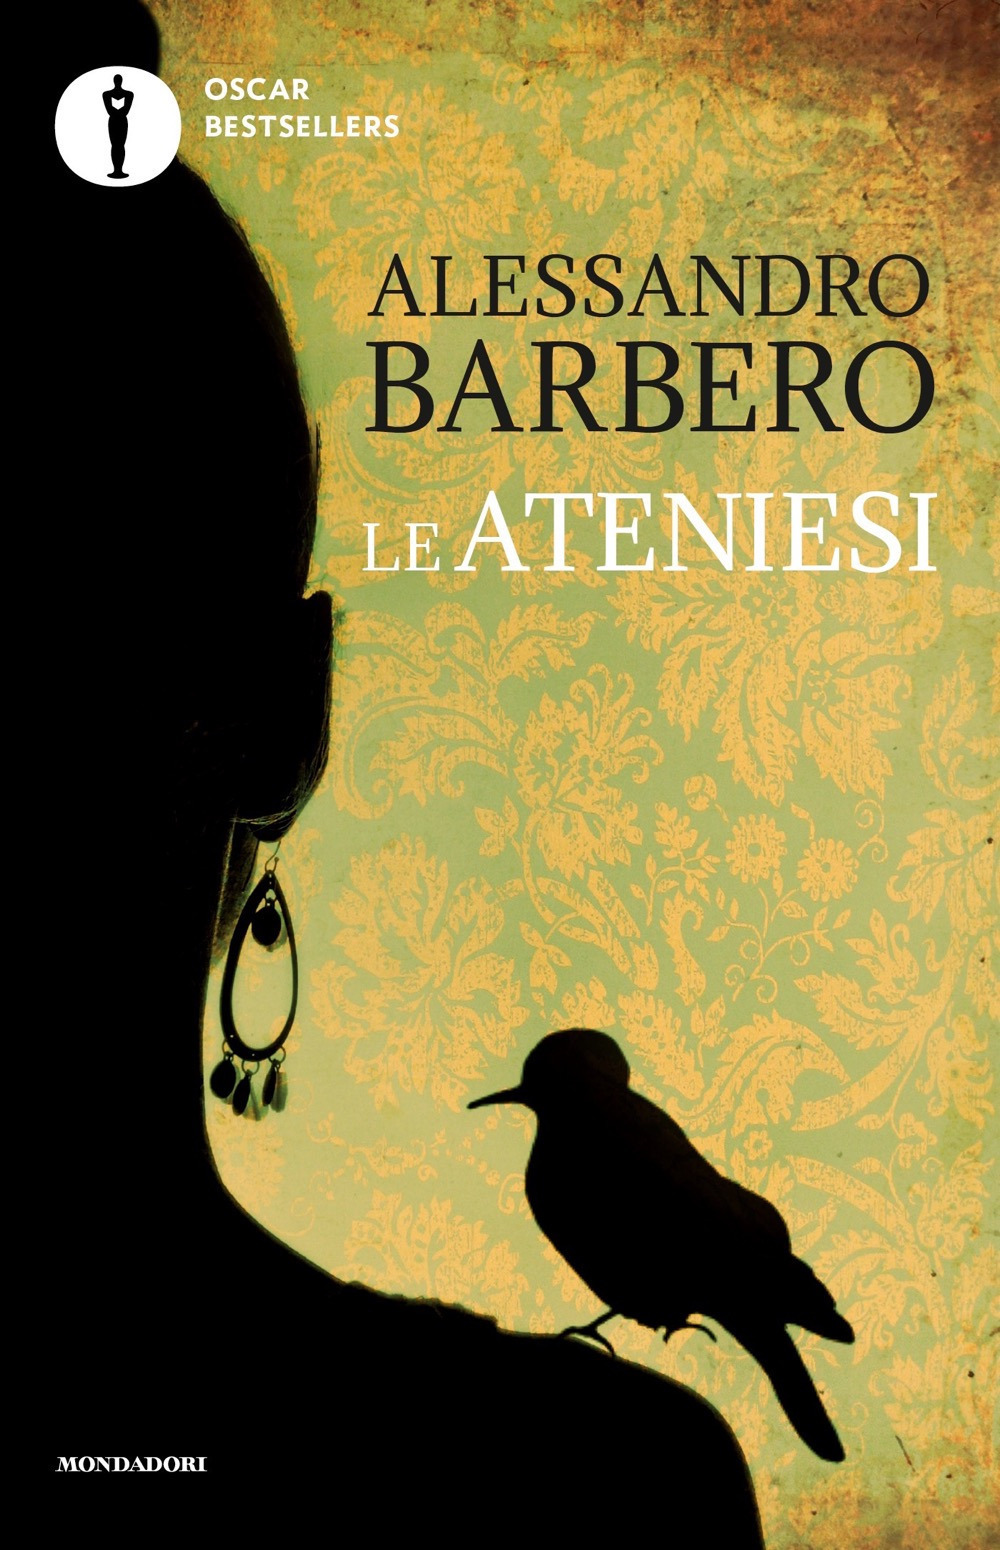 Le ateniesi - Alessandro Barbero - Mondadori